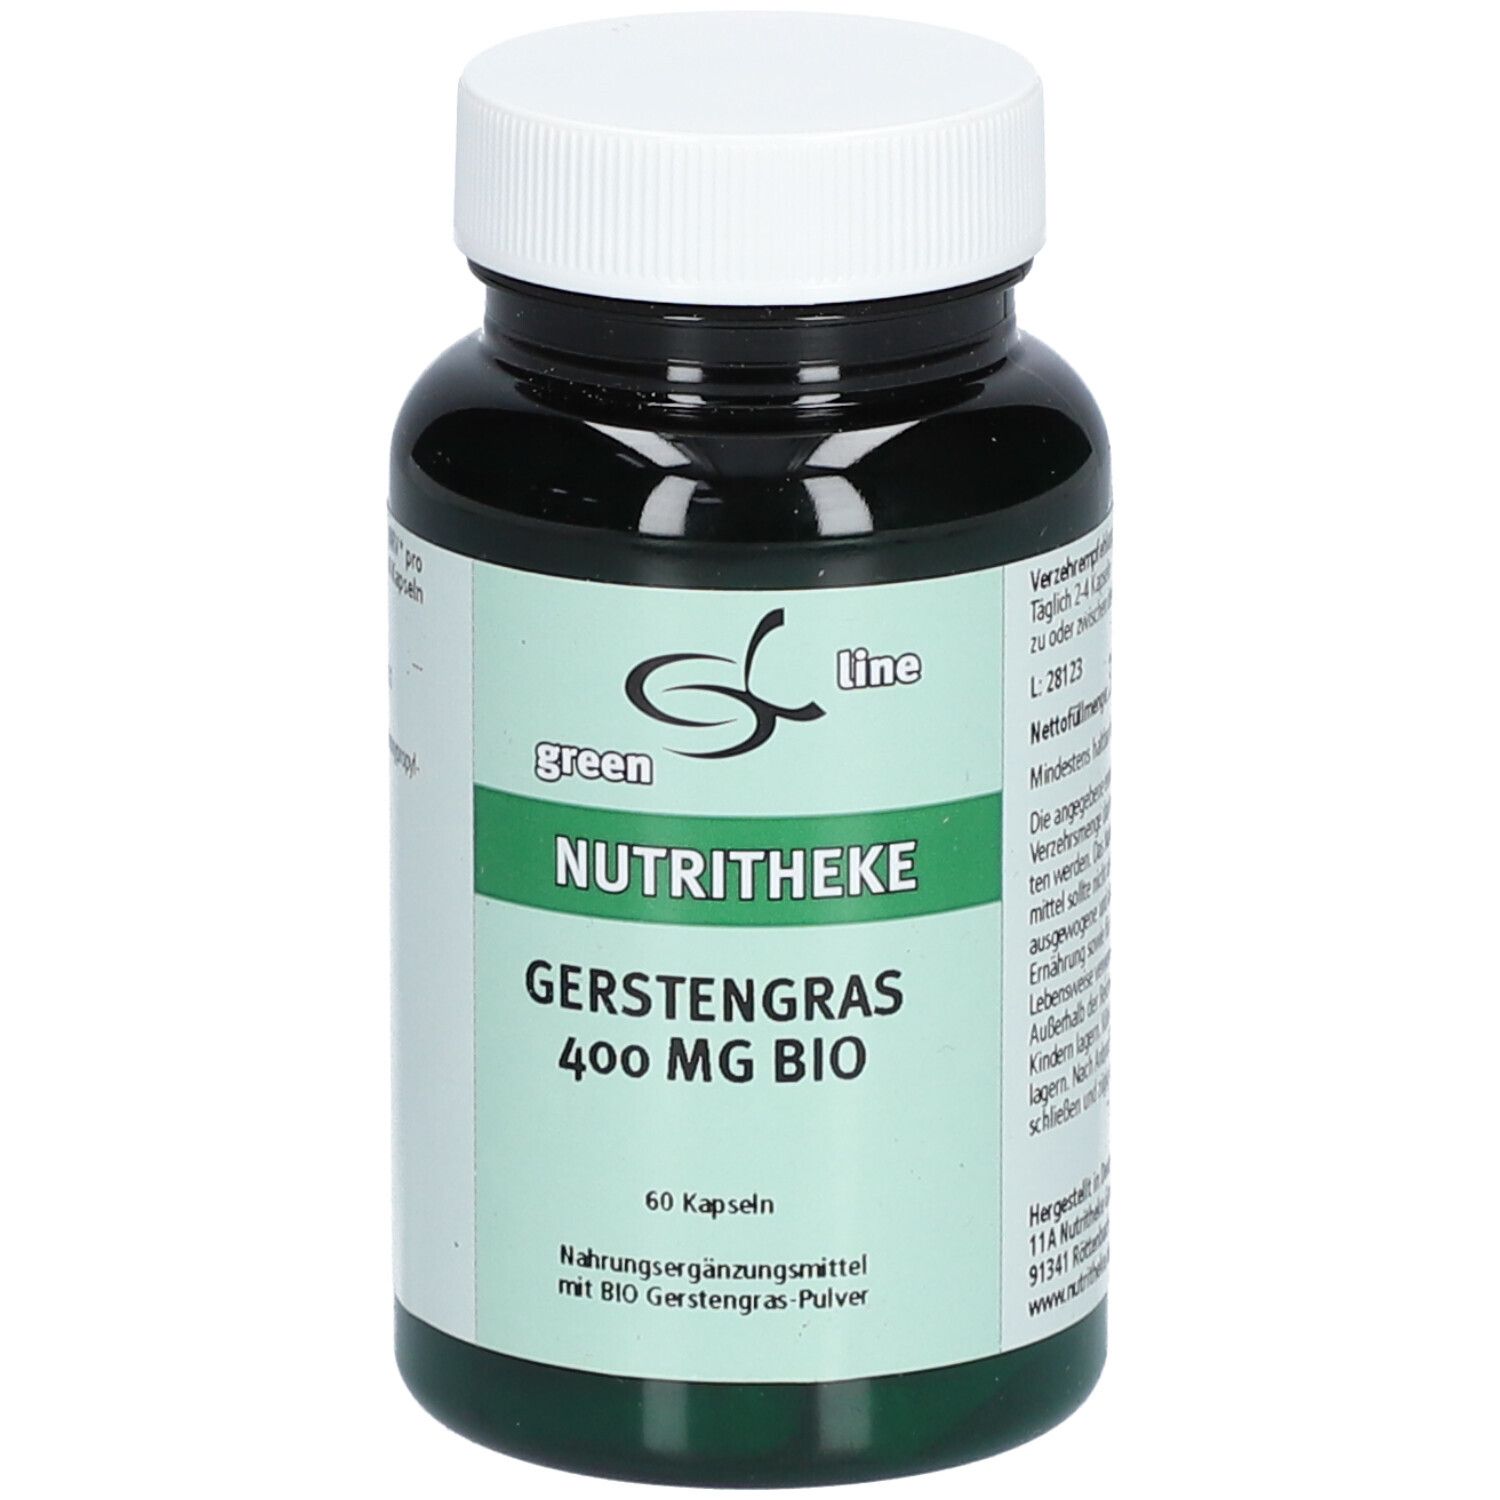 Image of green line GERSTENGRAS 400 mg BIO